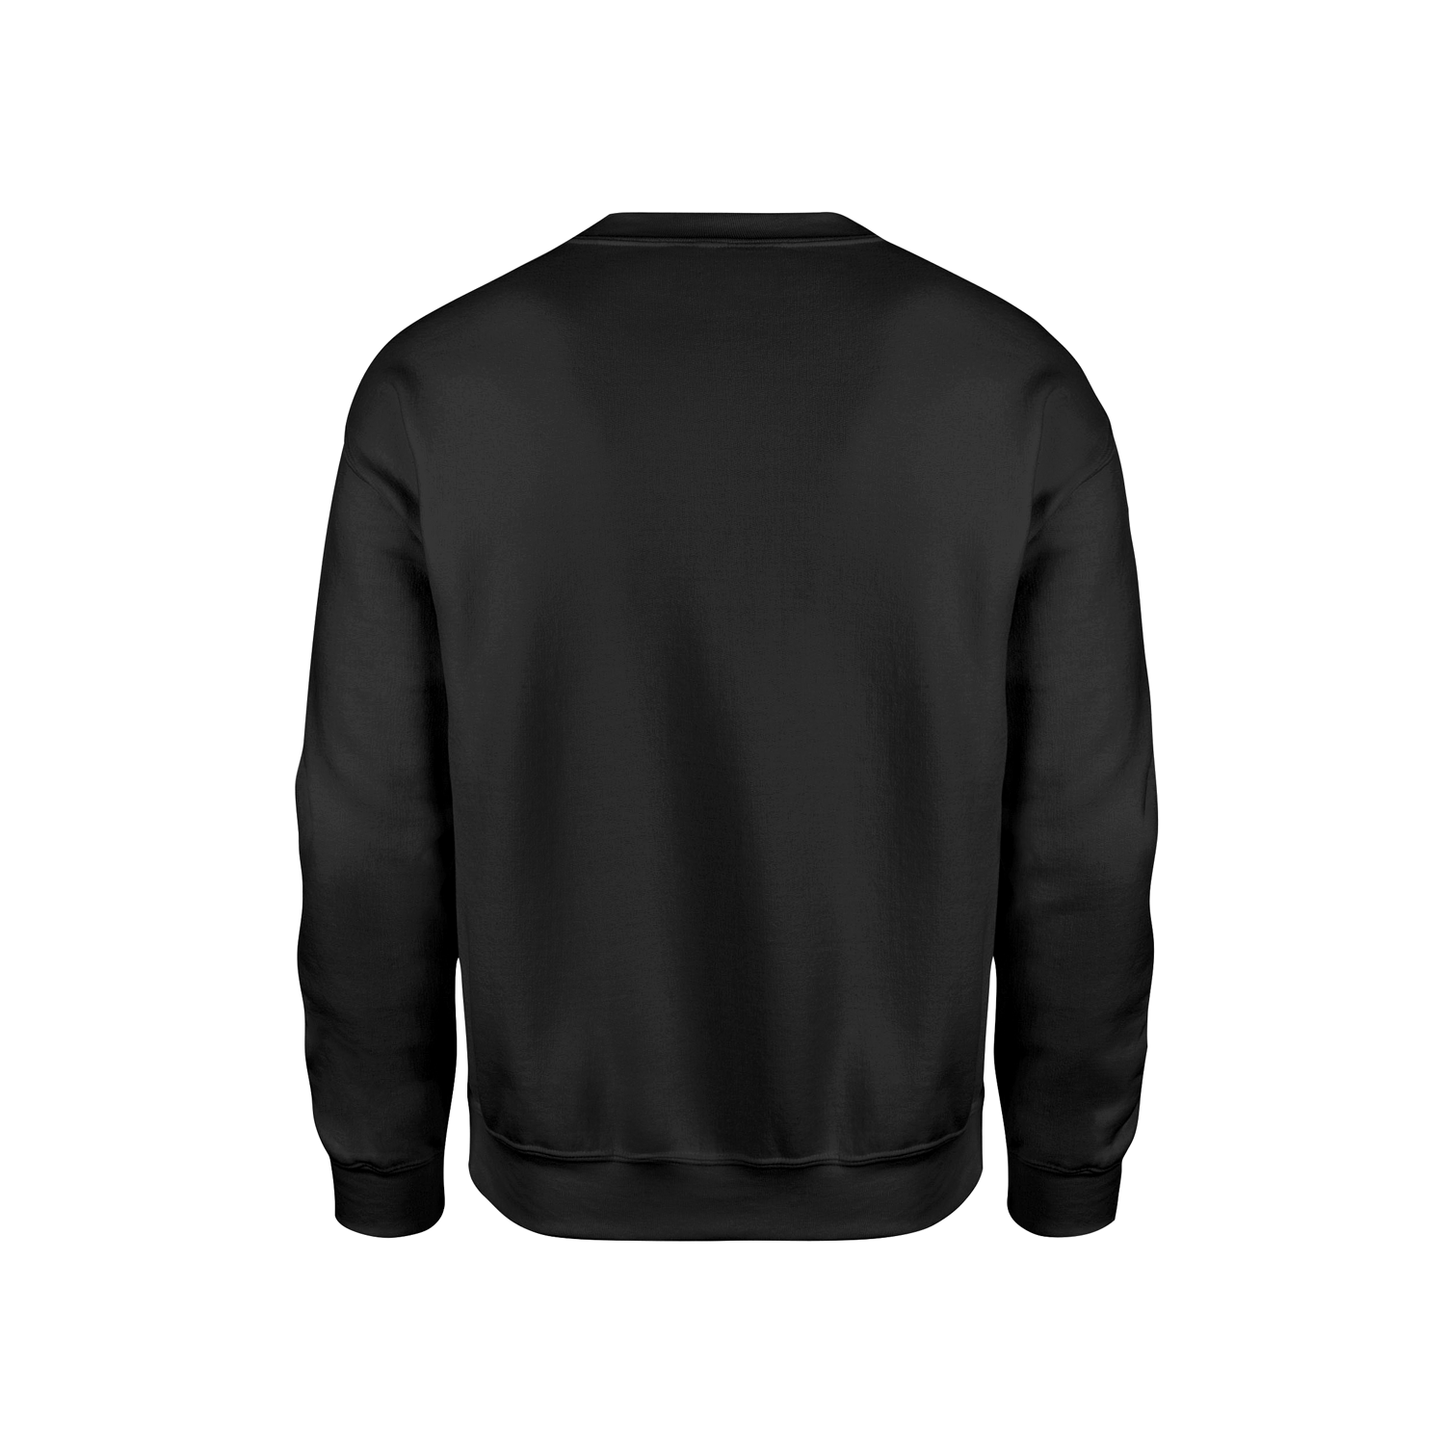 Bazarville Tshirt S / Black Sweatshirt - Jet Black